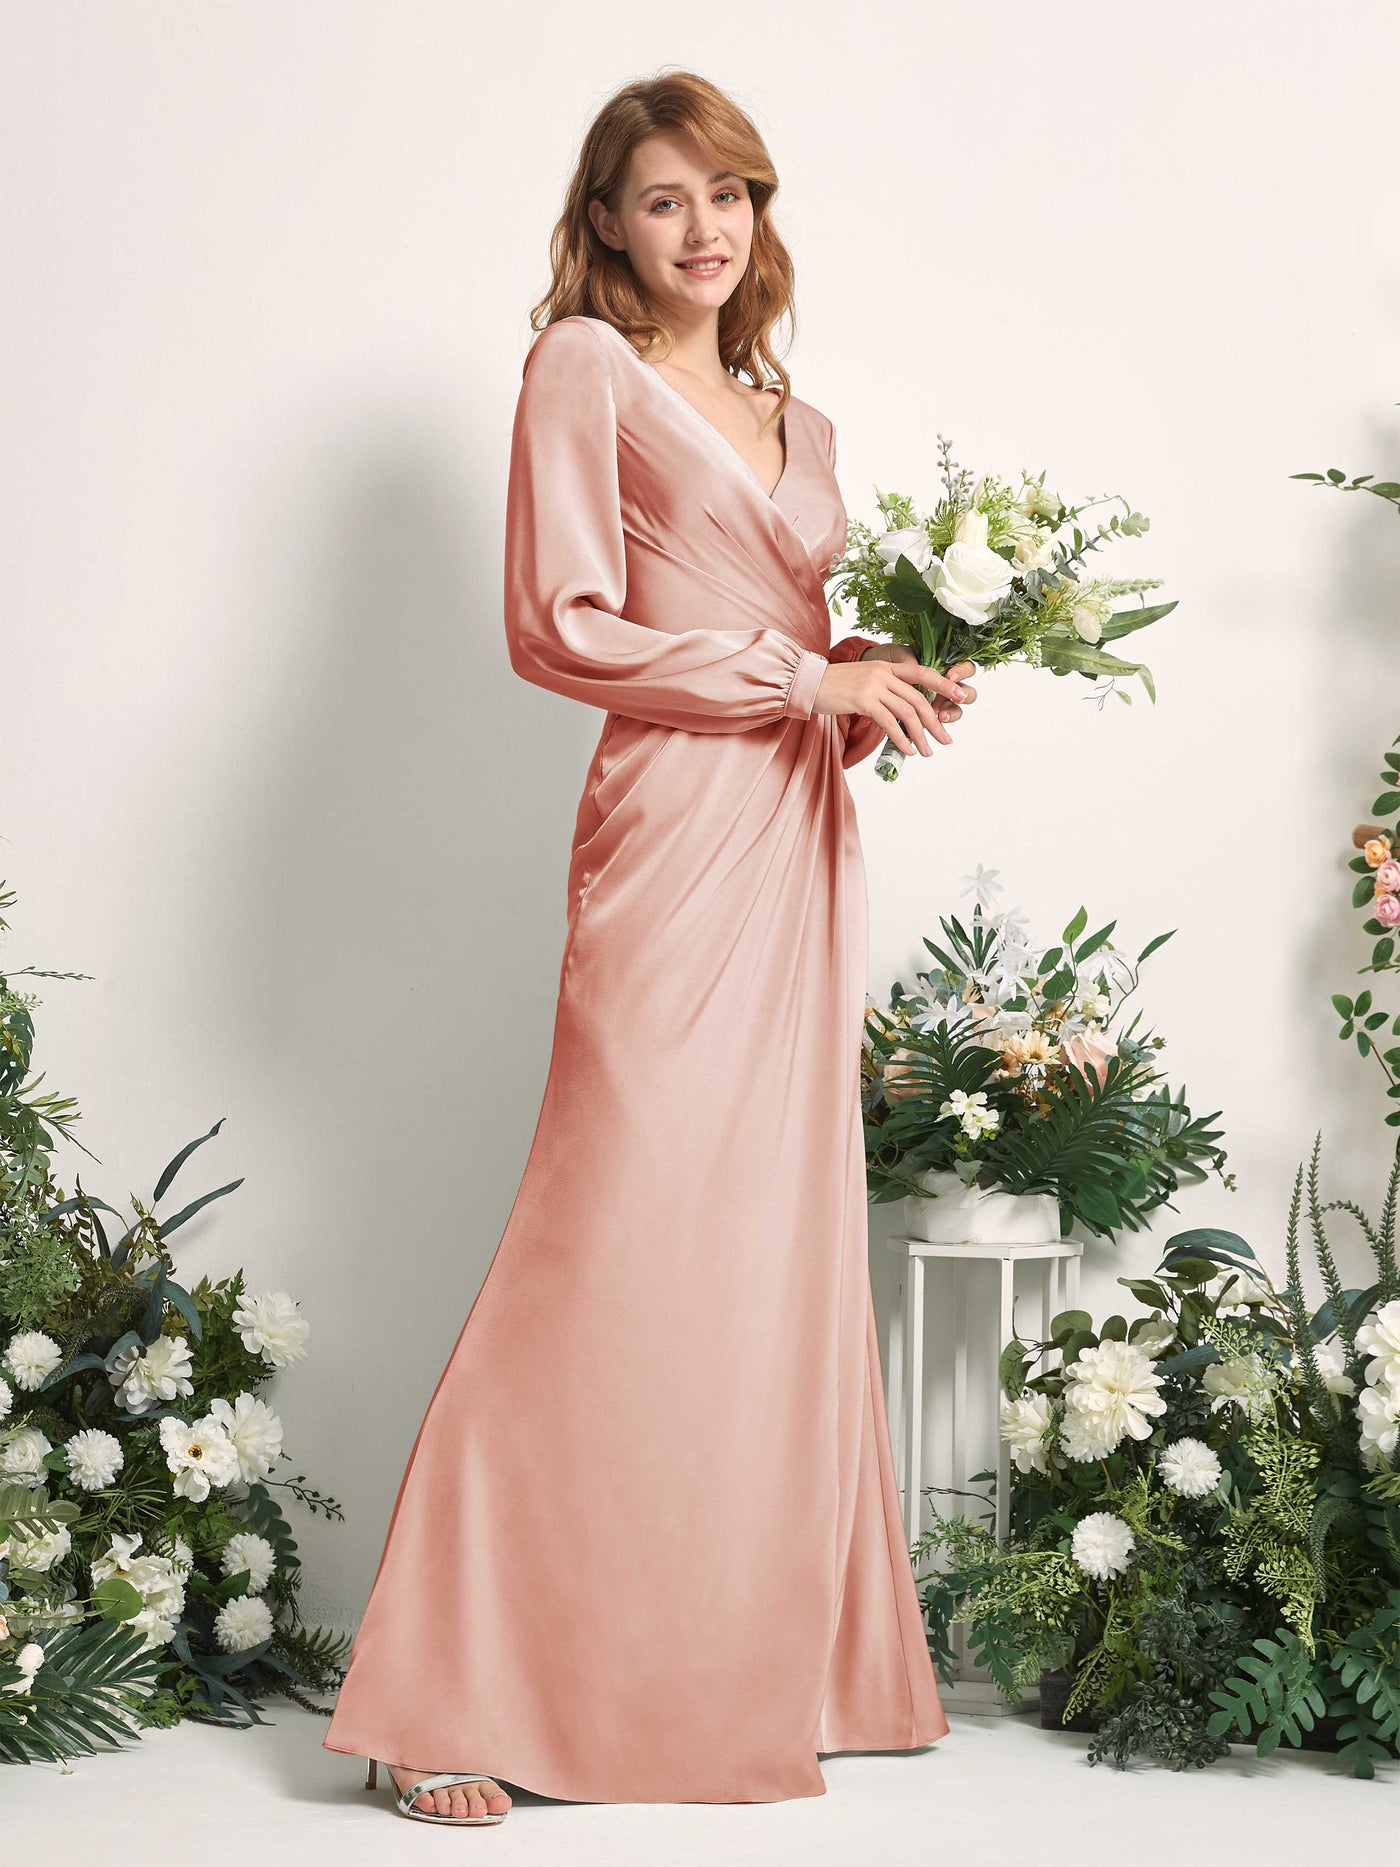 Cantaloupe Bridesmaid Dresses Bridesmaid Dress Ball Gown Satin V-neck Full Length Long Sleeves Wedding Party Dress (80225132)#color_cantaloupe